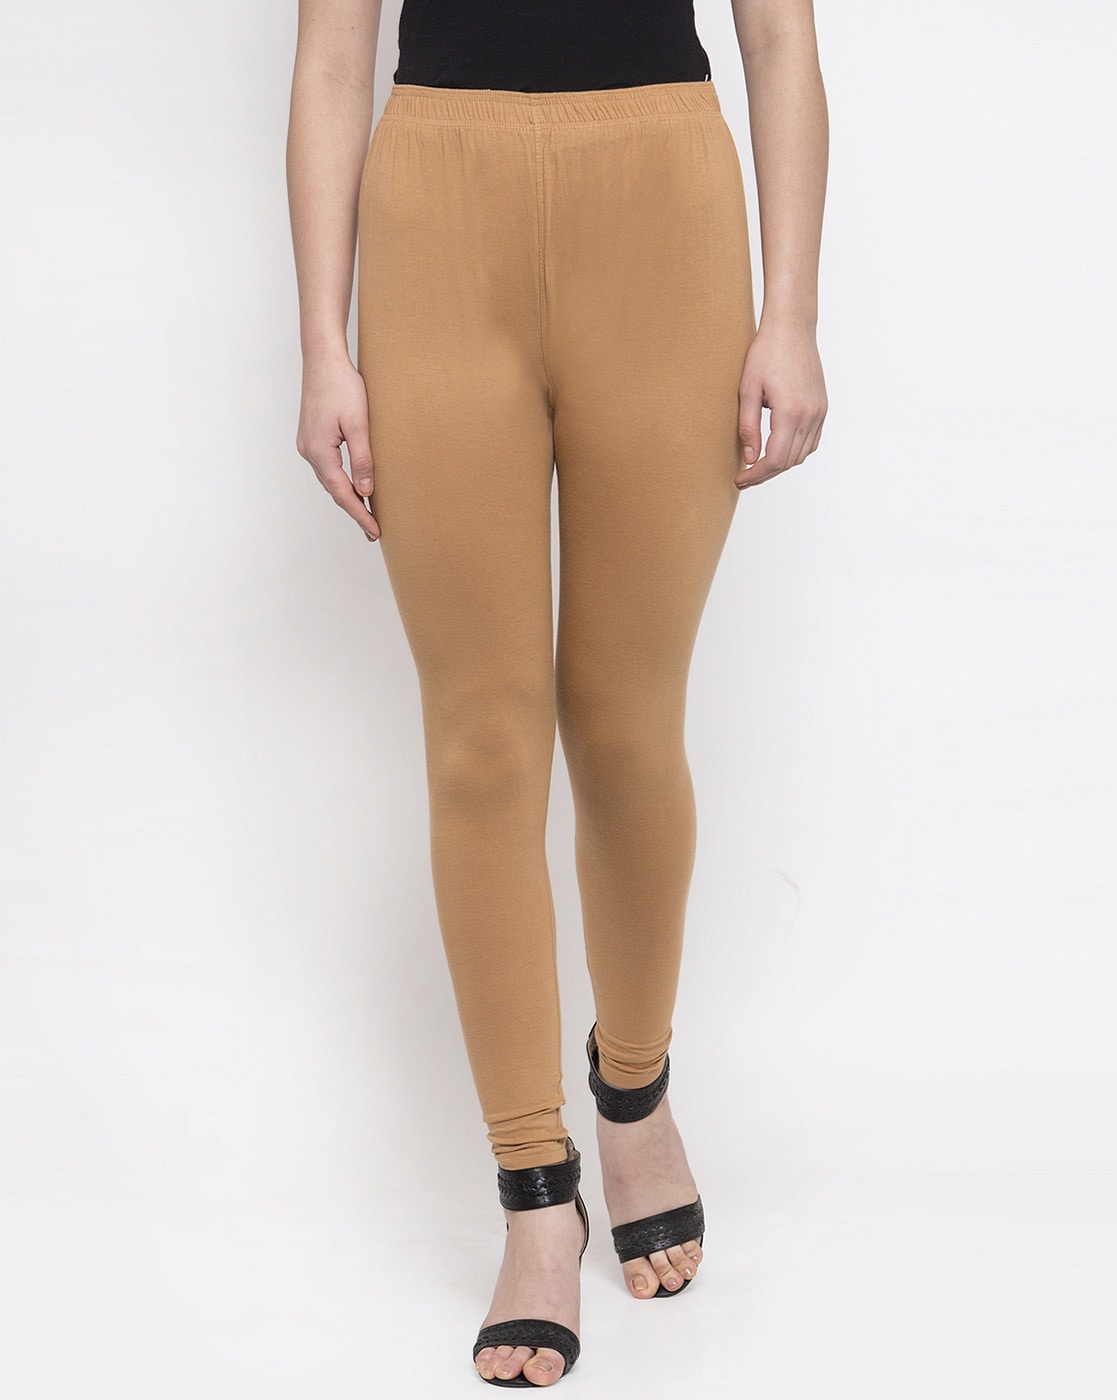 Imitation leather leggings - Dark beige - Ladies | H&M IN